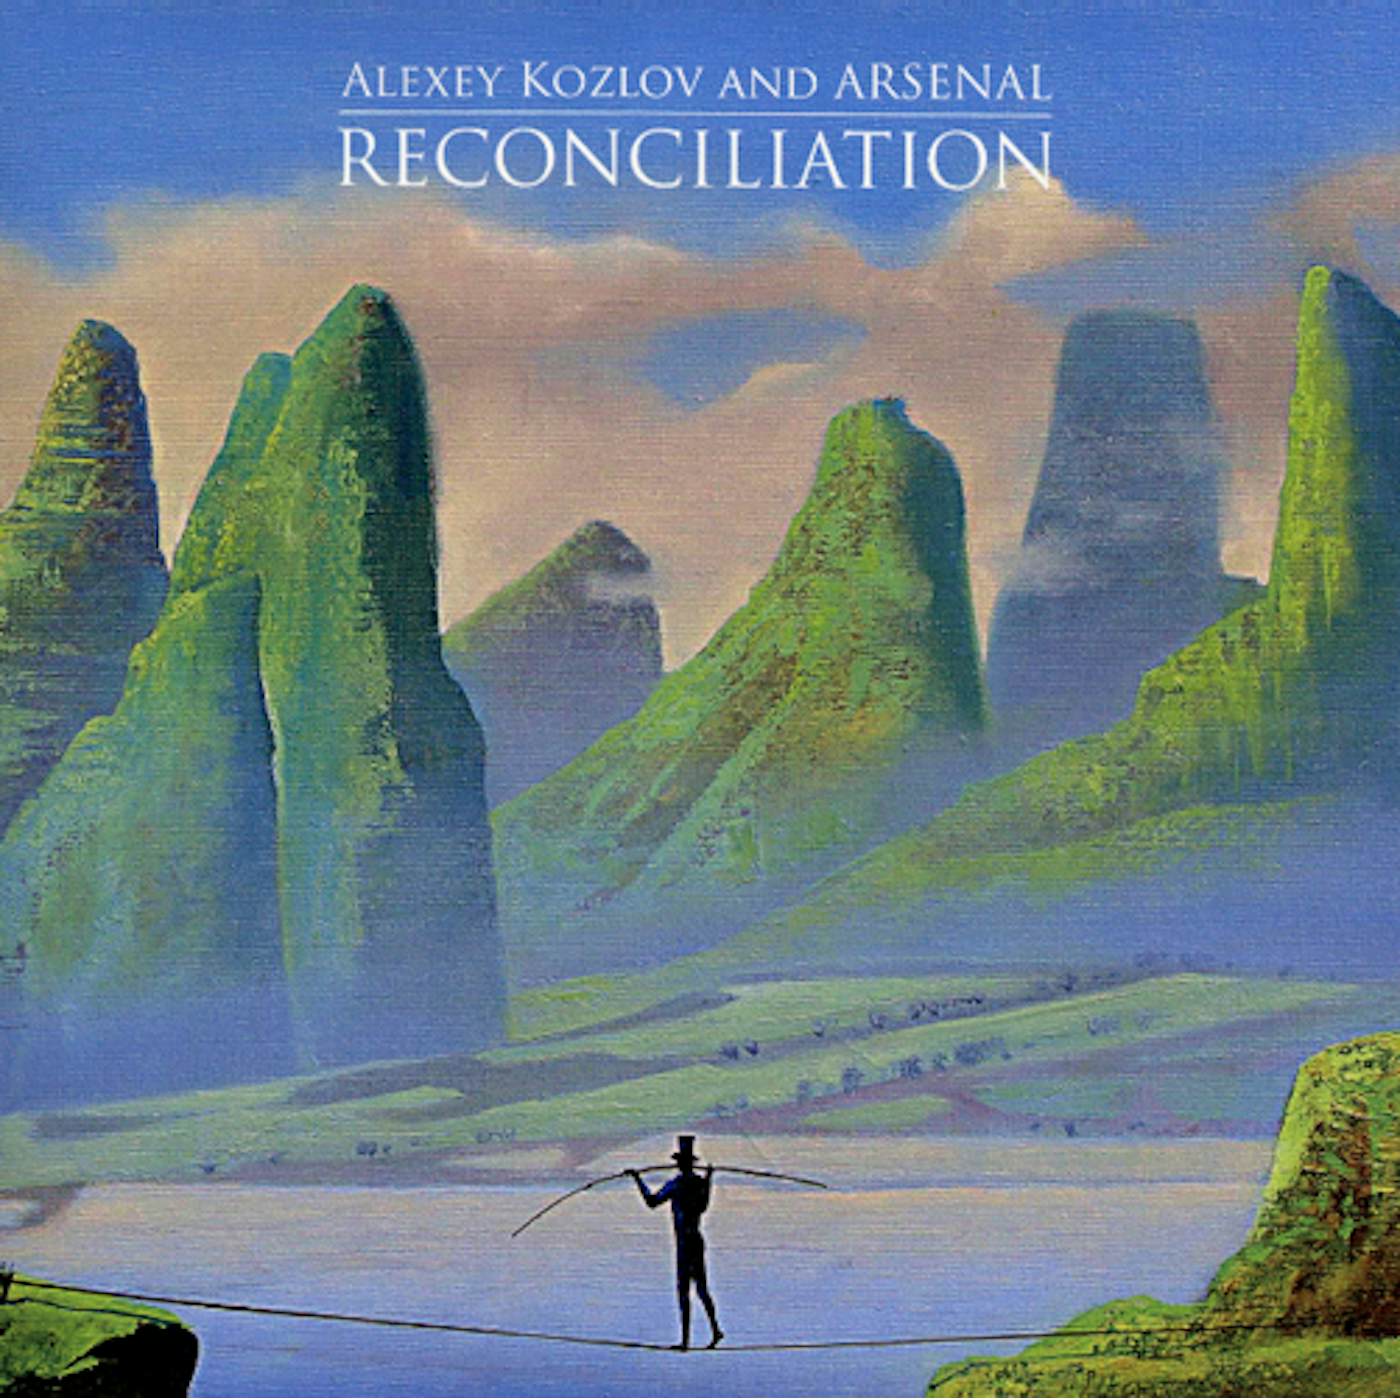 Alexey Kozlov & ARSENAL RECONCILIATION Vinyl Record